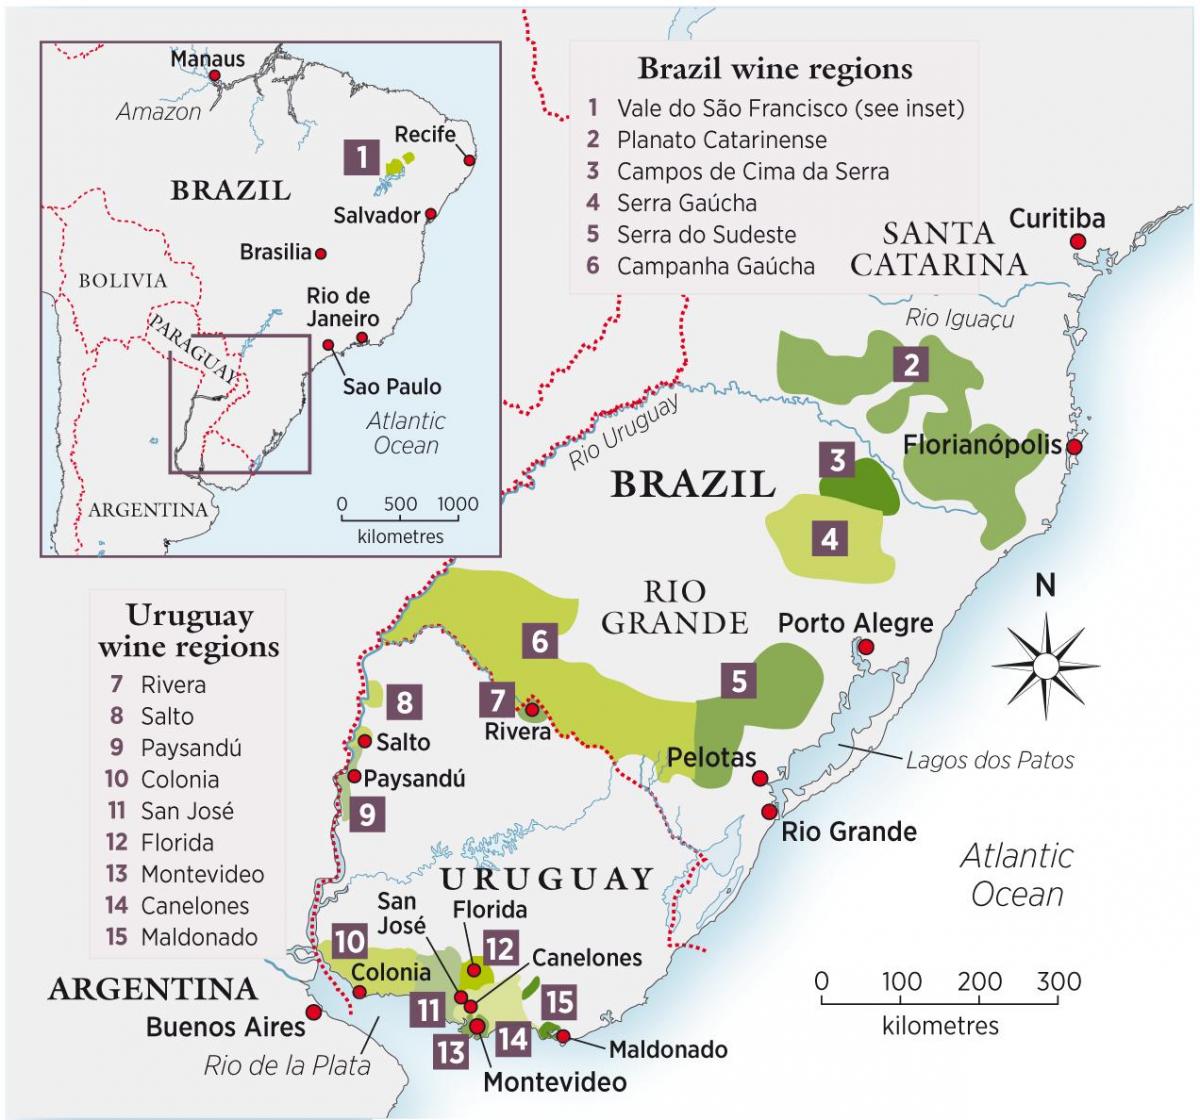 Map of Uruguay wine